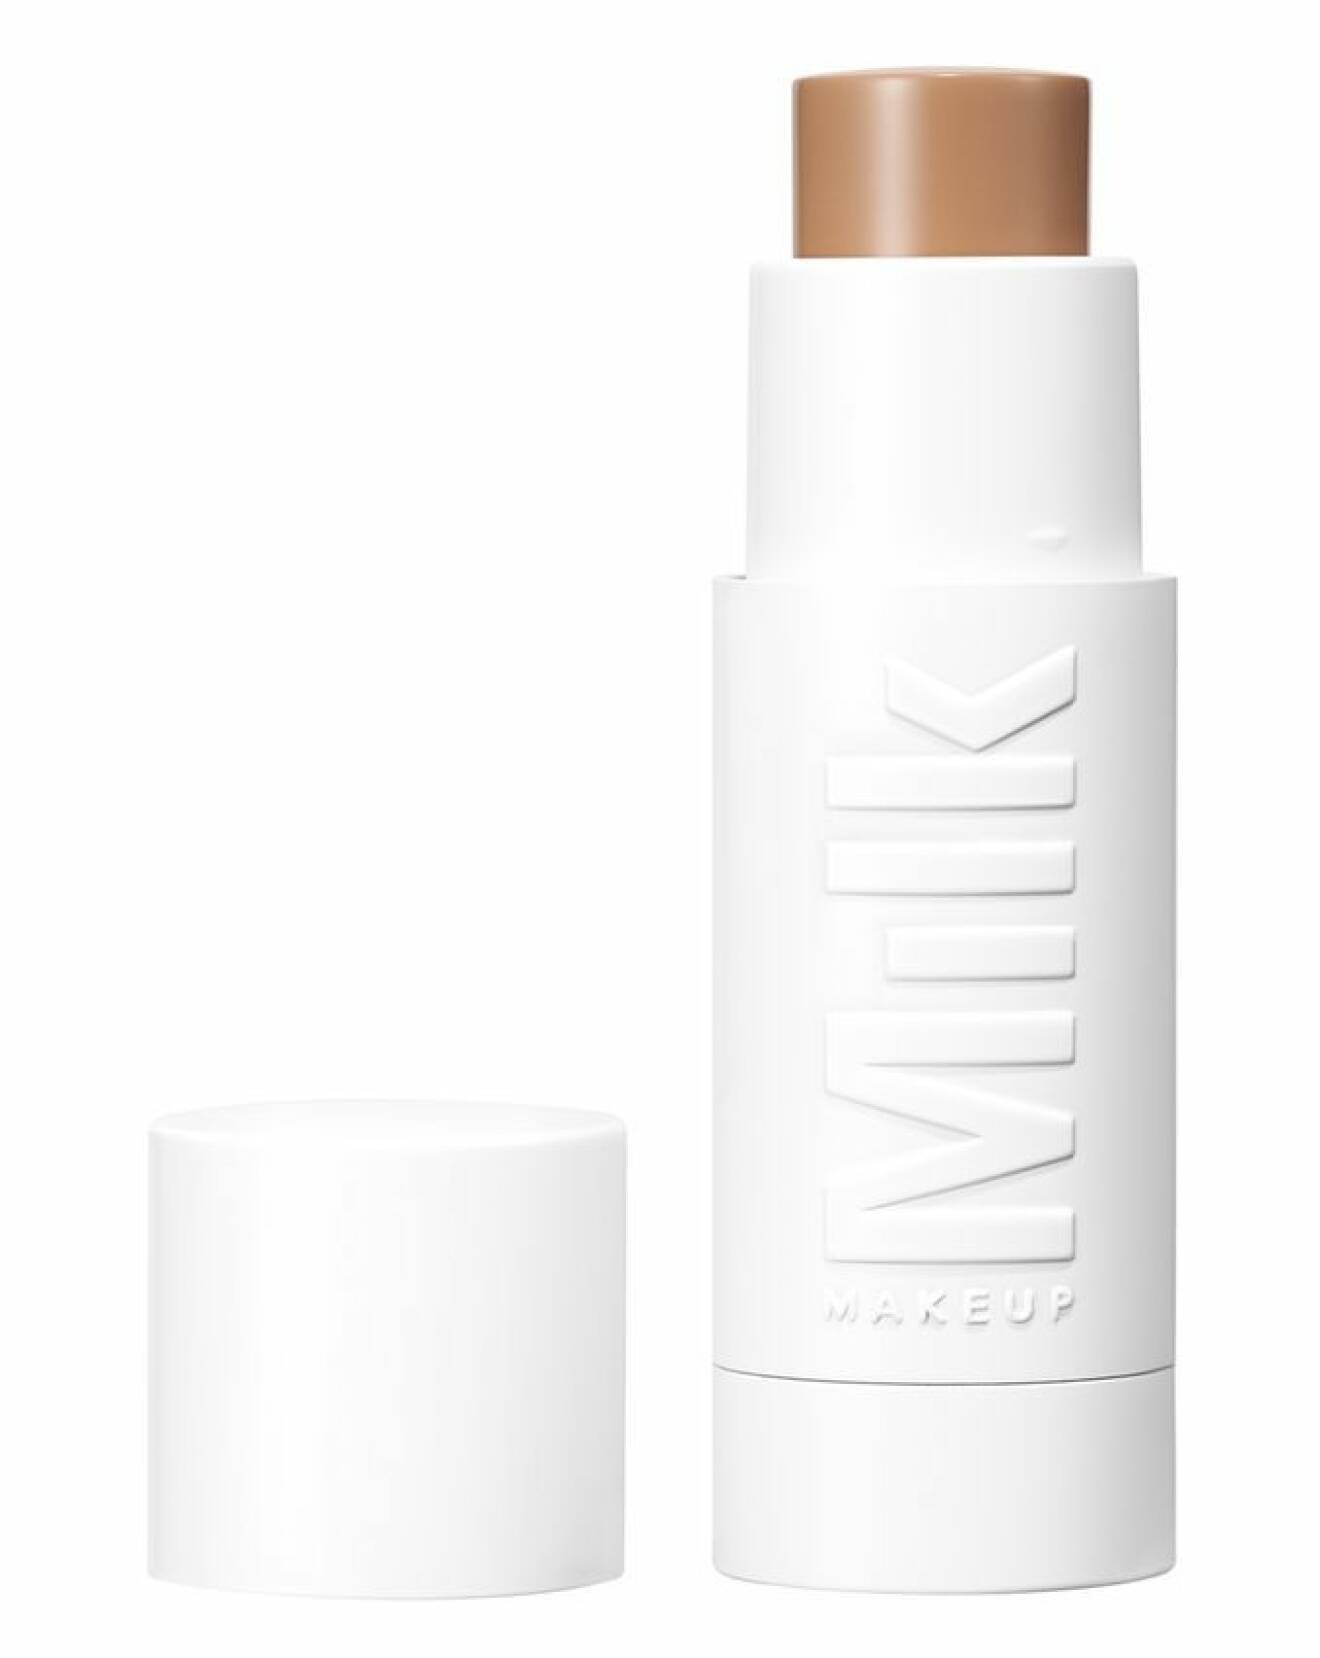 Foundation stick milk makeup